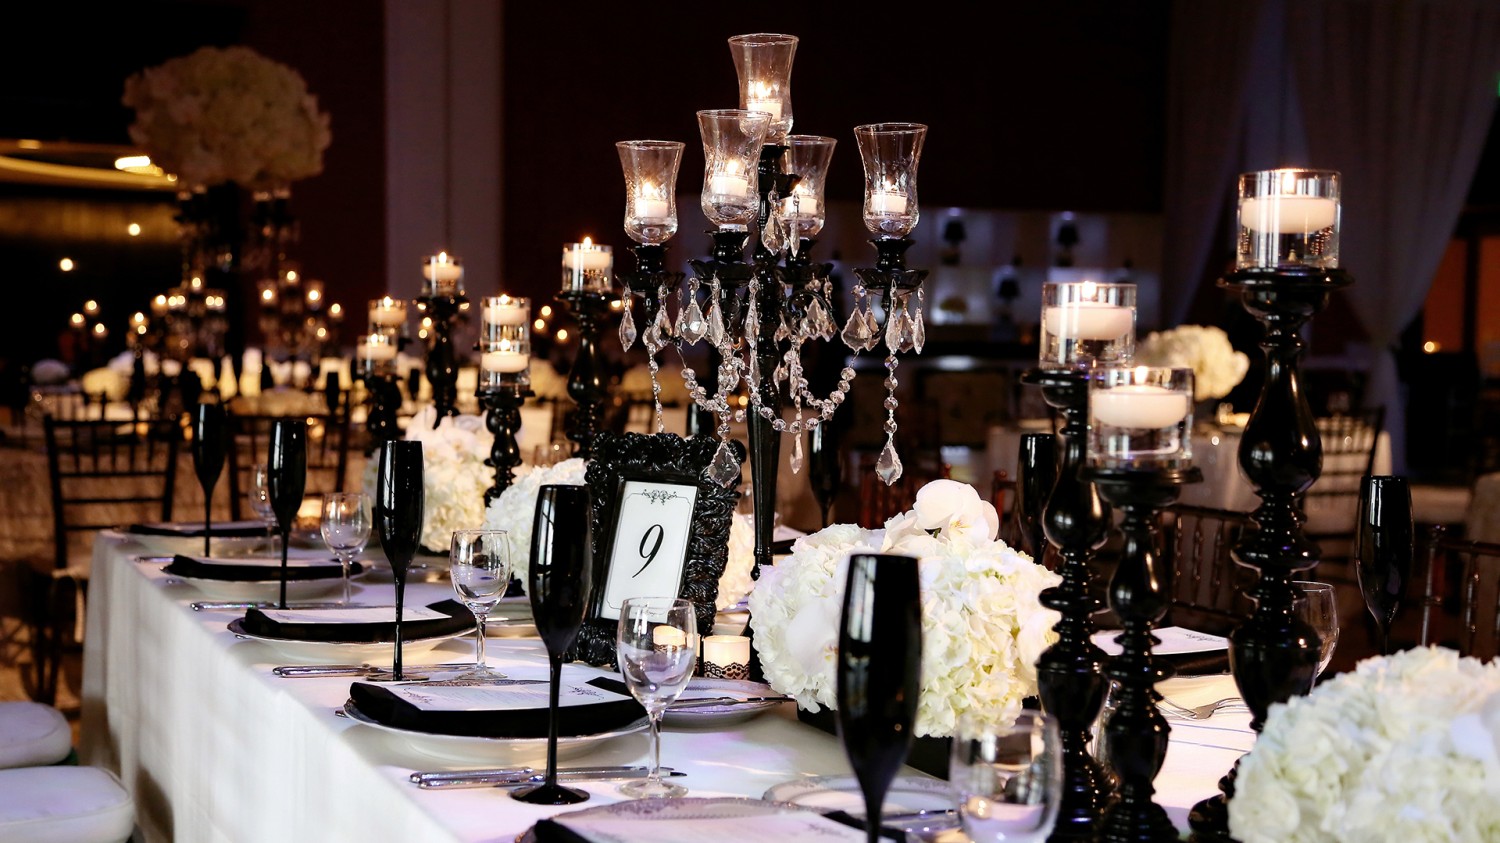 Amway Grand_Wedding Set Up_Champagne Glasses_Candlesticks_Flowers_Plates_Napkins_Glasses